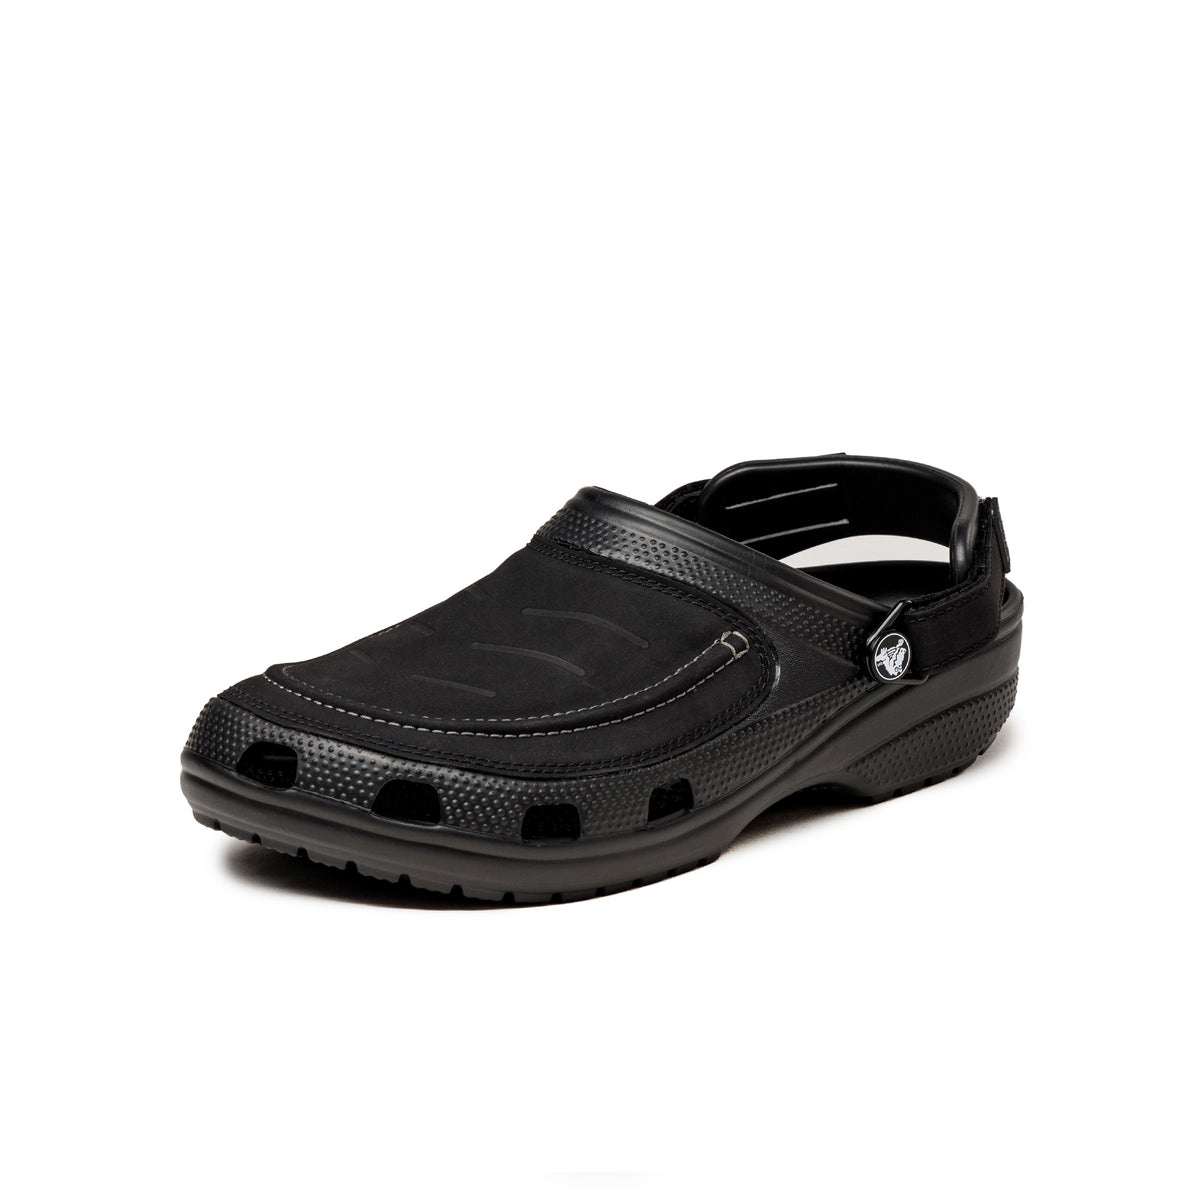 Crocs Yukon Vista II Clog M » Buy online now!